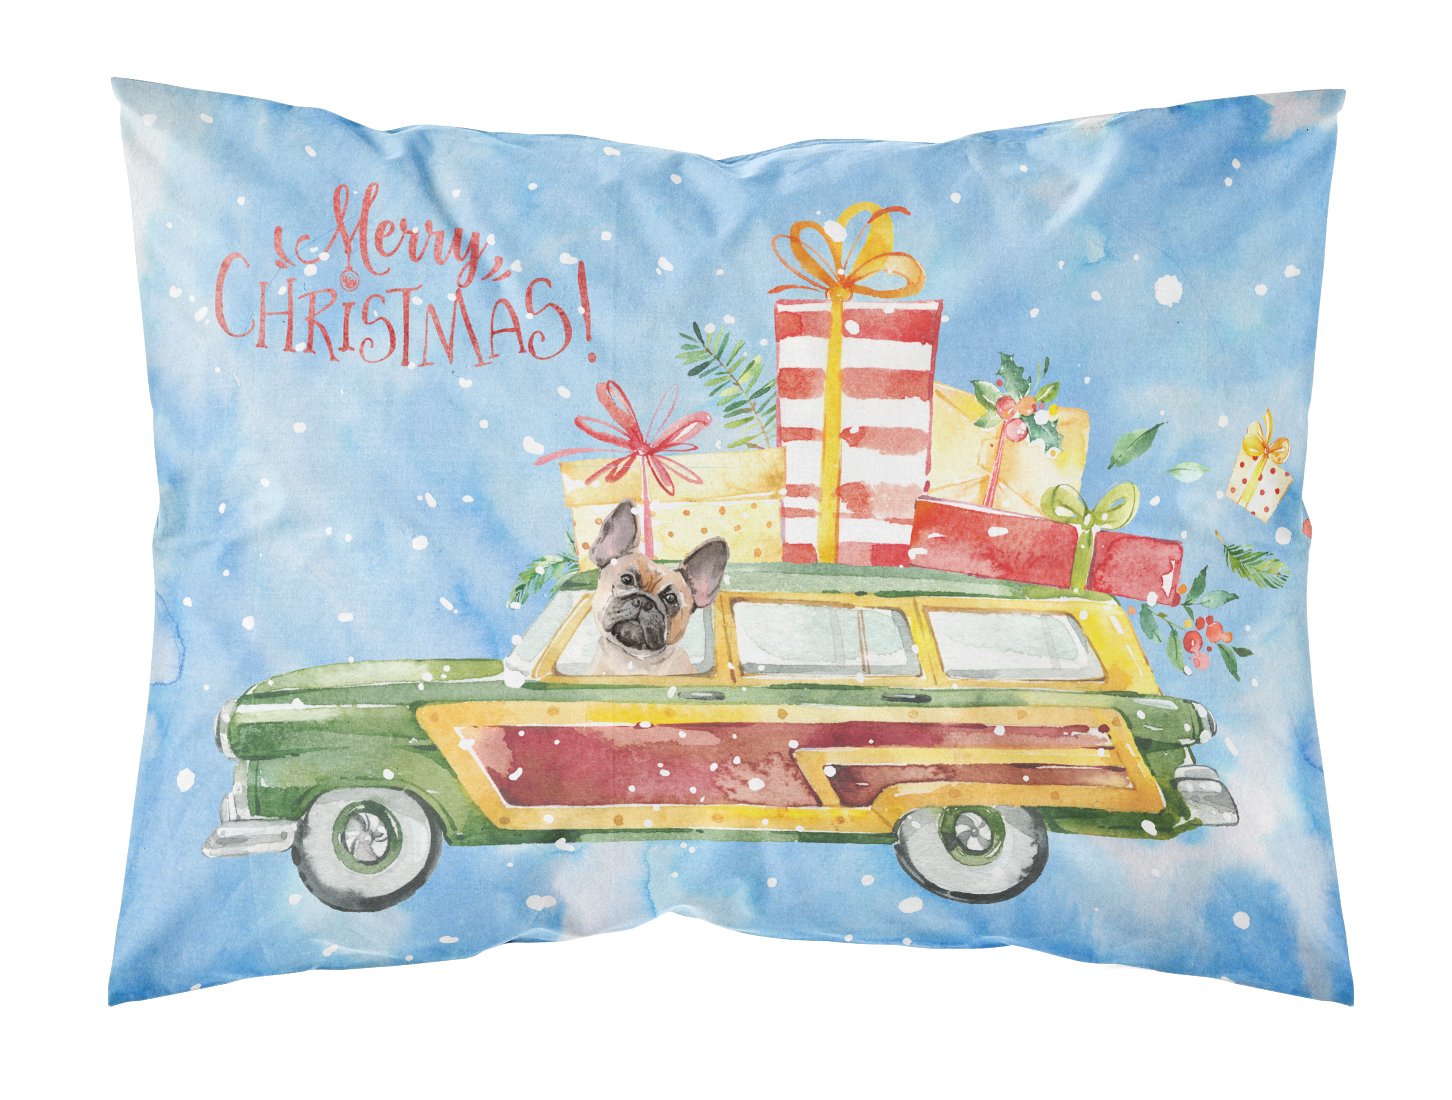 Merry Christmas Fawn French Bulldog Fabric Standard Pillowcase CK2454PILLOWCASE by Caroline's Treasures